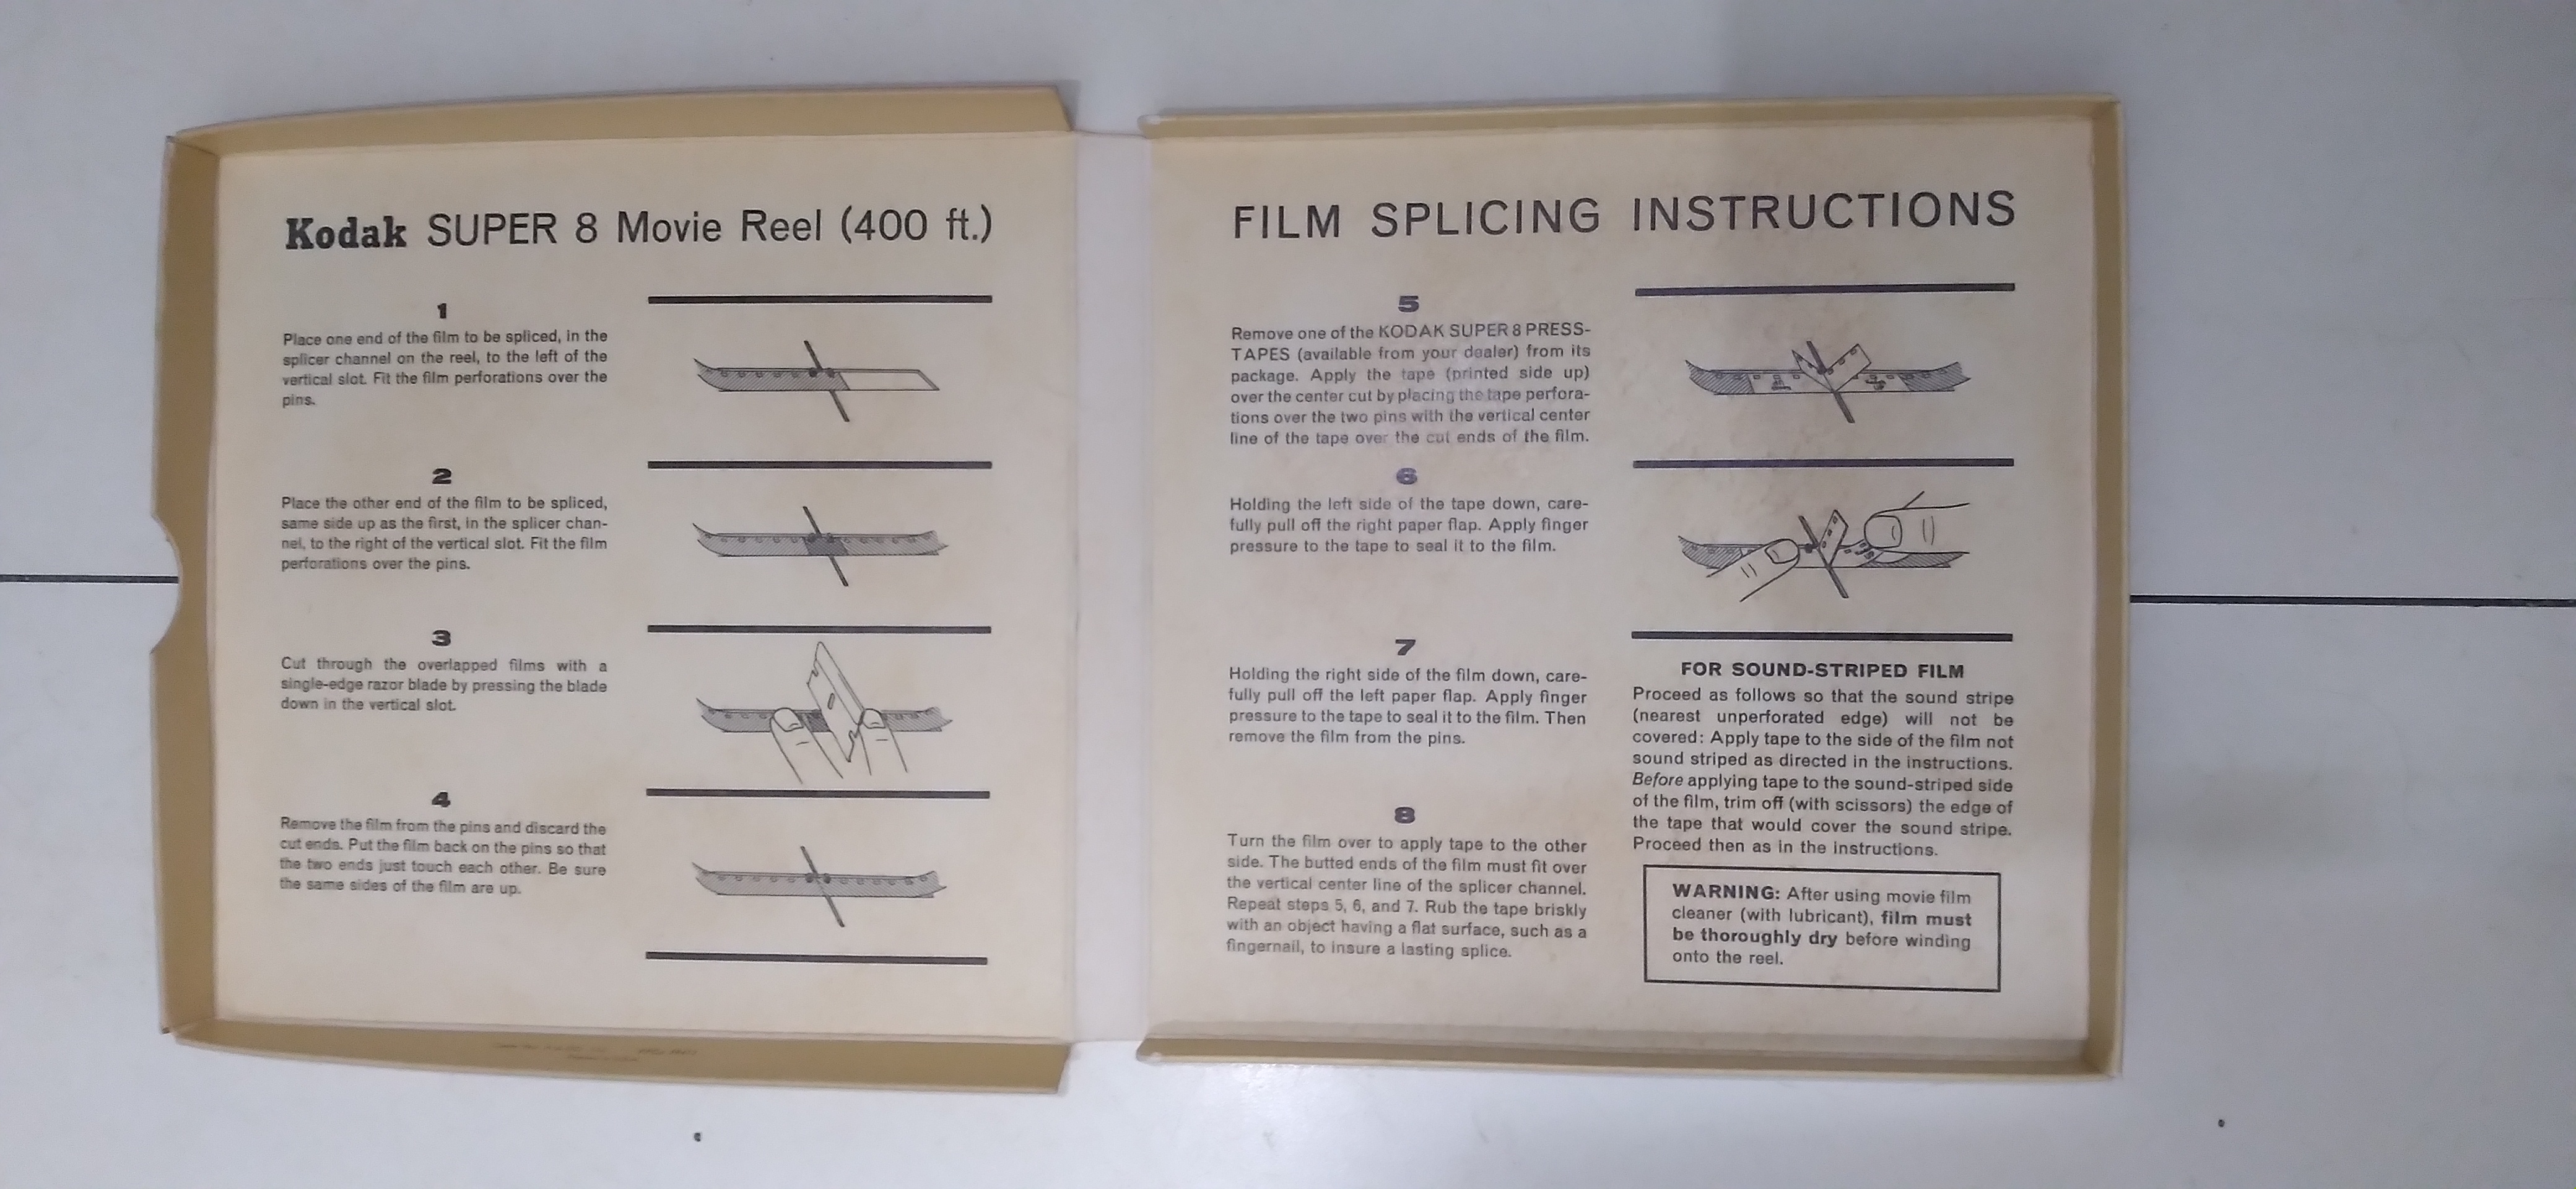 File:Kodak spool box 400 ft splice instructions C.jpg - Wikipedia